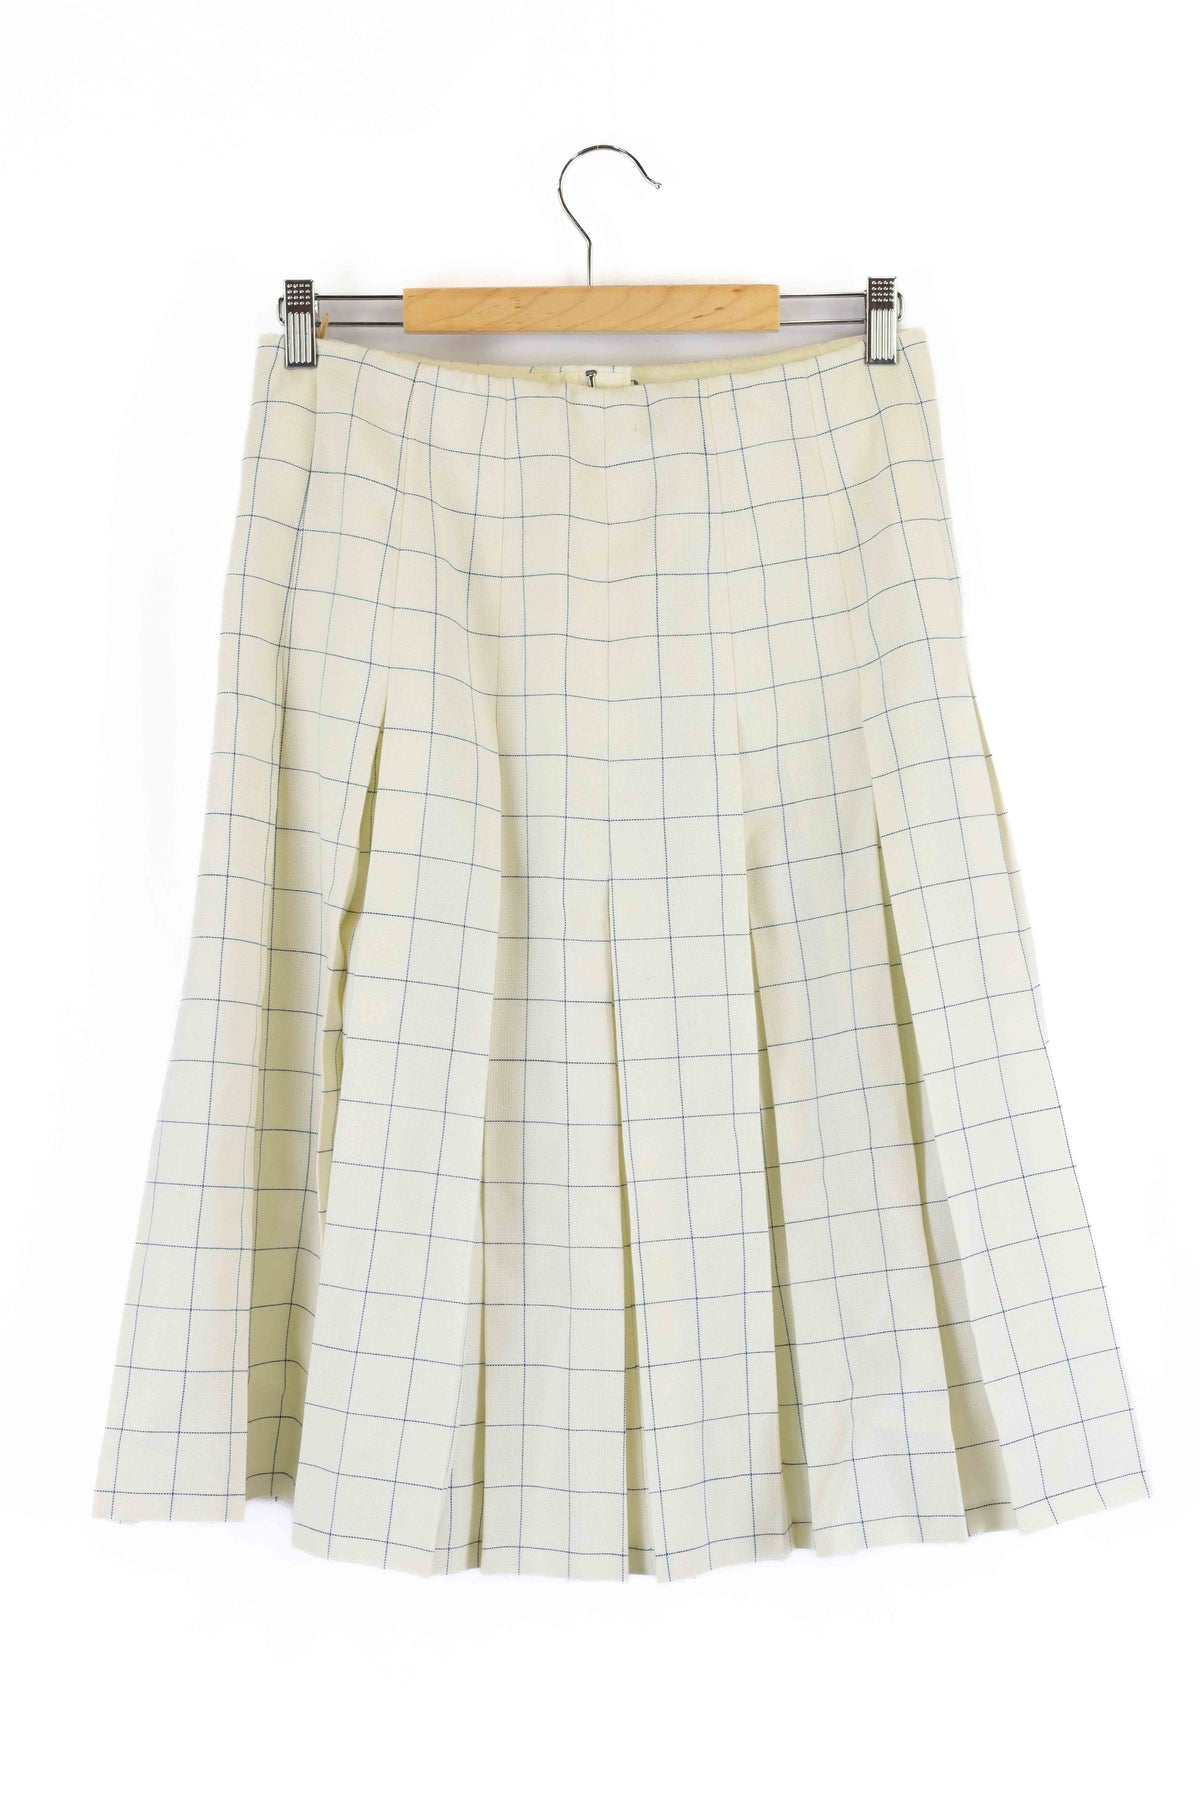 Fletcher Jones Vintage Yellow Wool Skirt 16